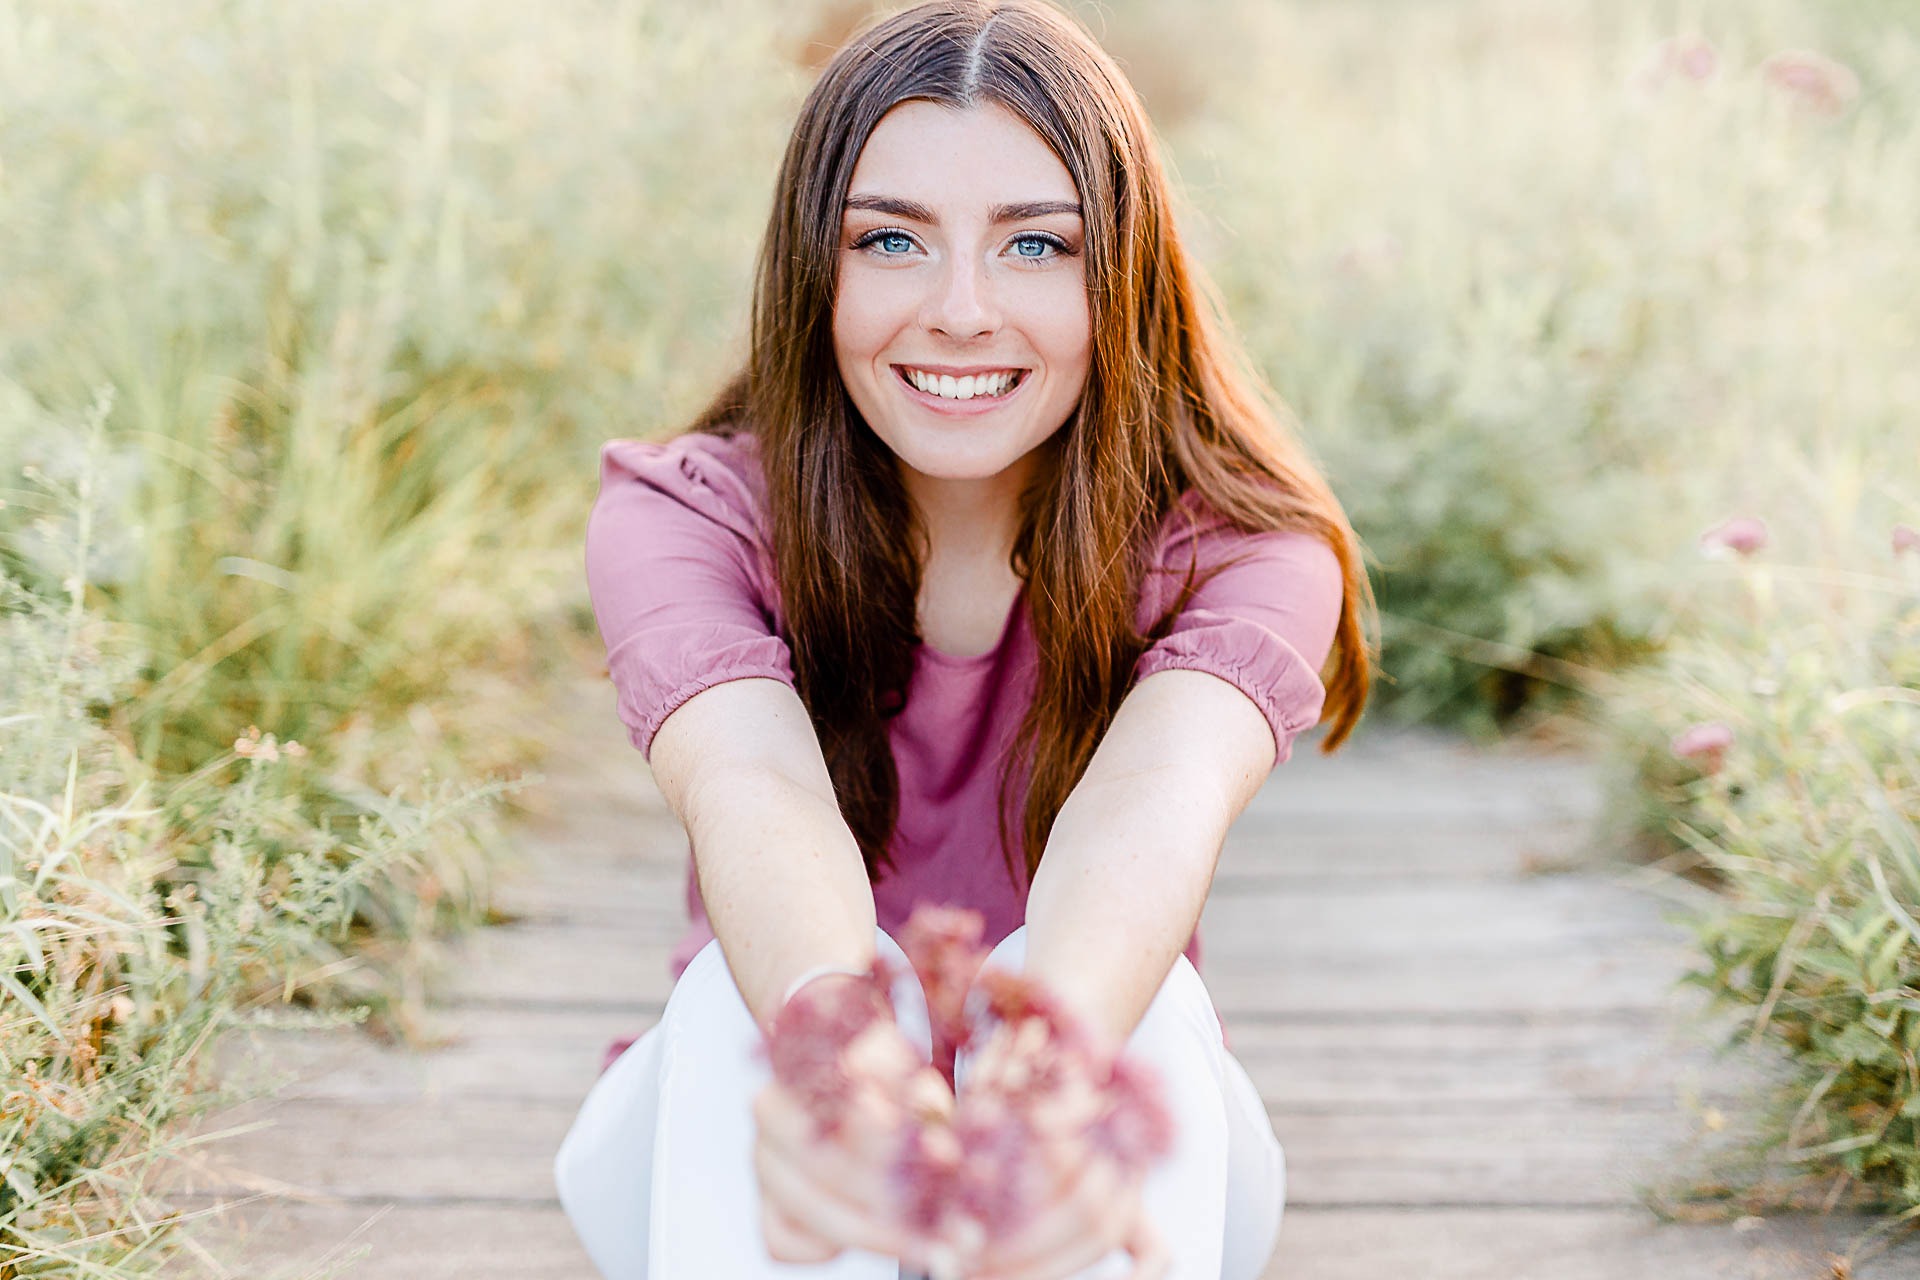 Photo by Duxbury senior portrait photographer Christina Runnals | High school senior girl holding flowers sitting on a little bridge